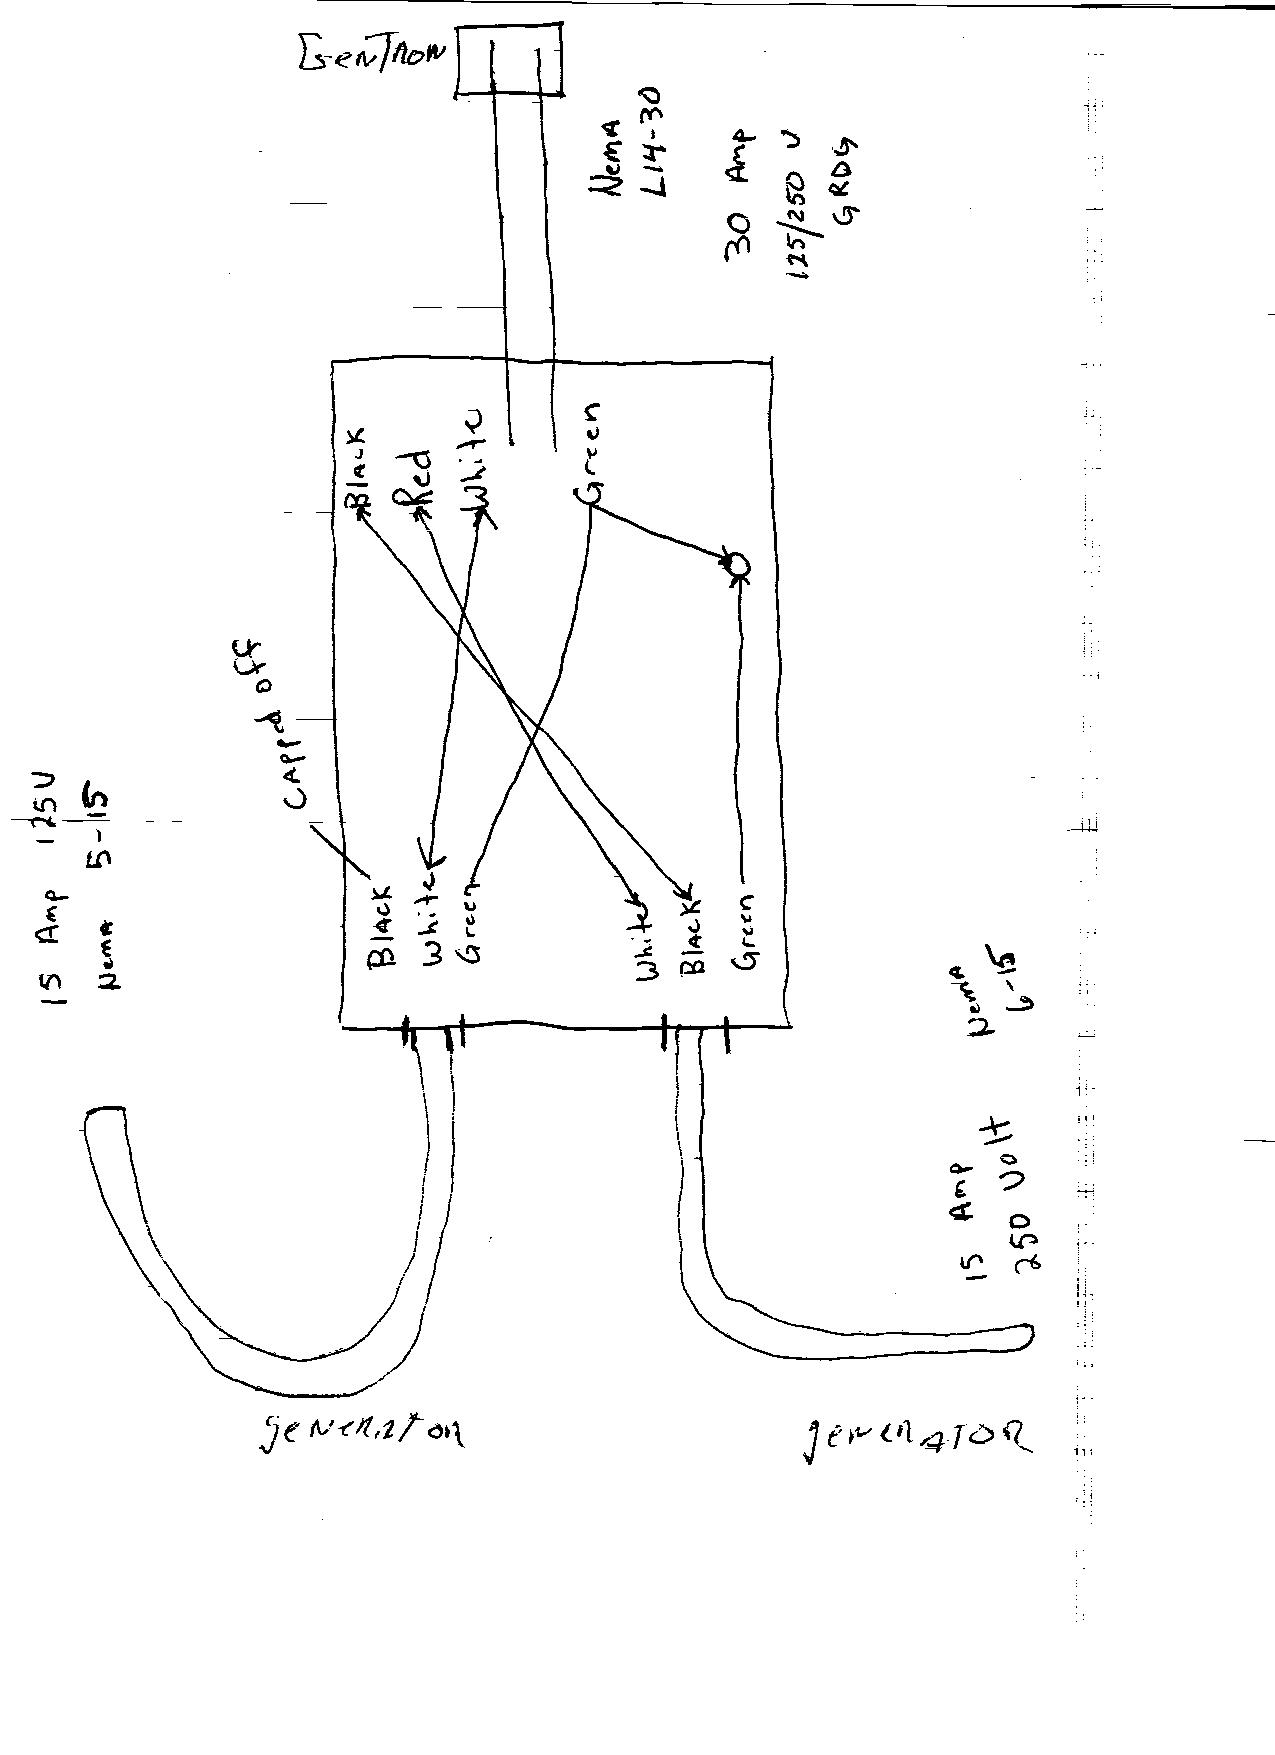 l1420p wiring diagram generator to dryer